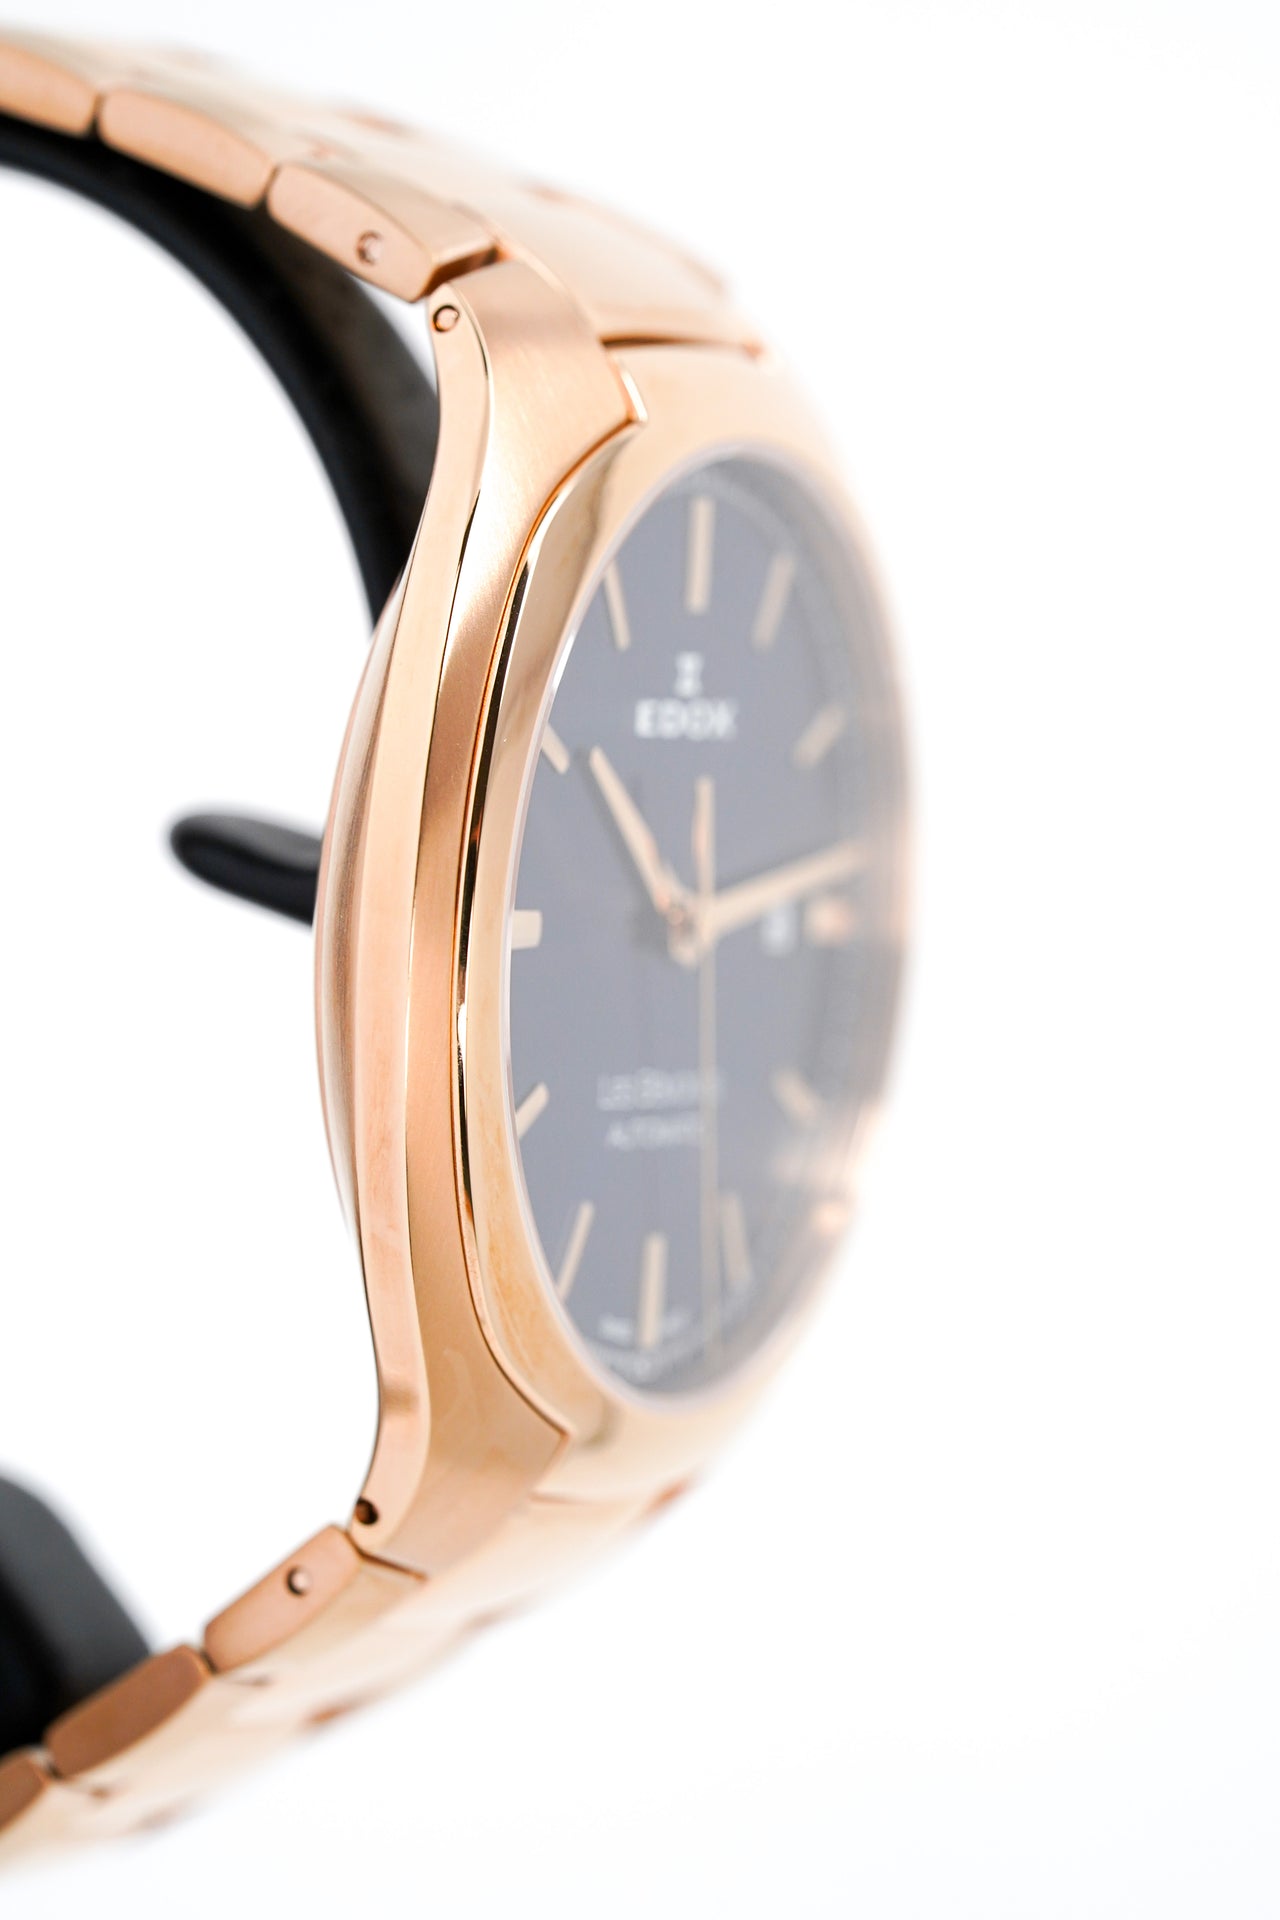 Edox Men's Automatic Watch Les Bèmonts Ultra Slim Blue Rose Gold 42mm 80114 37R BUIR